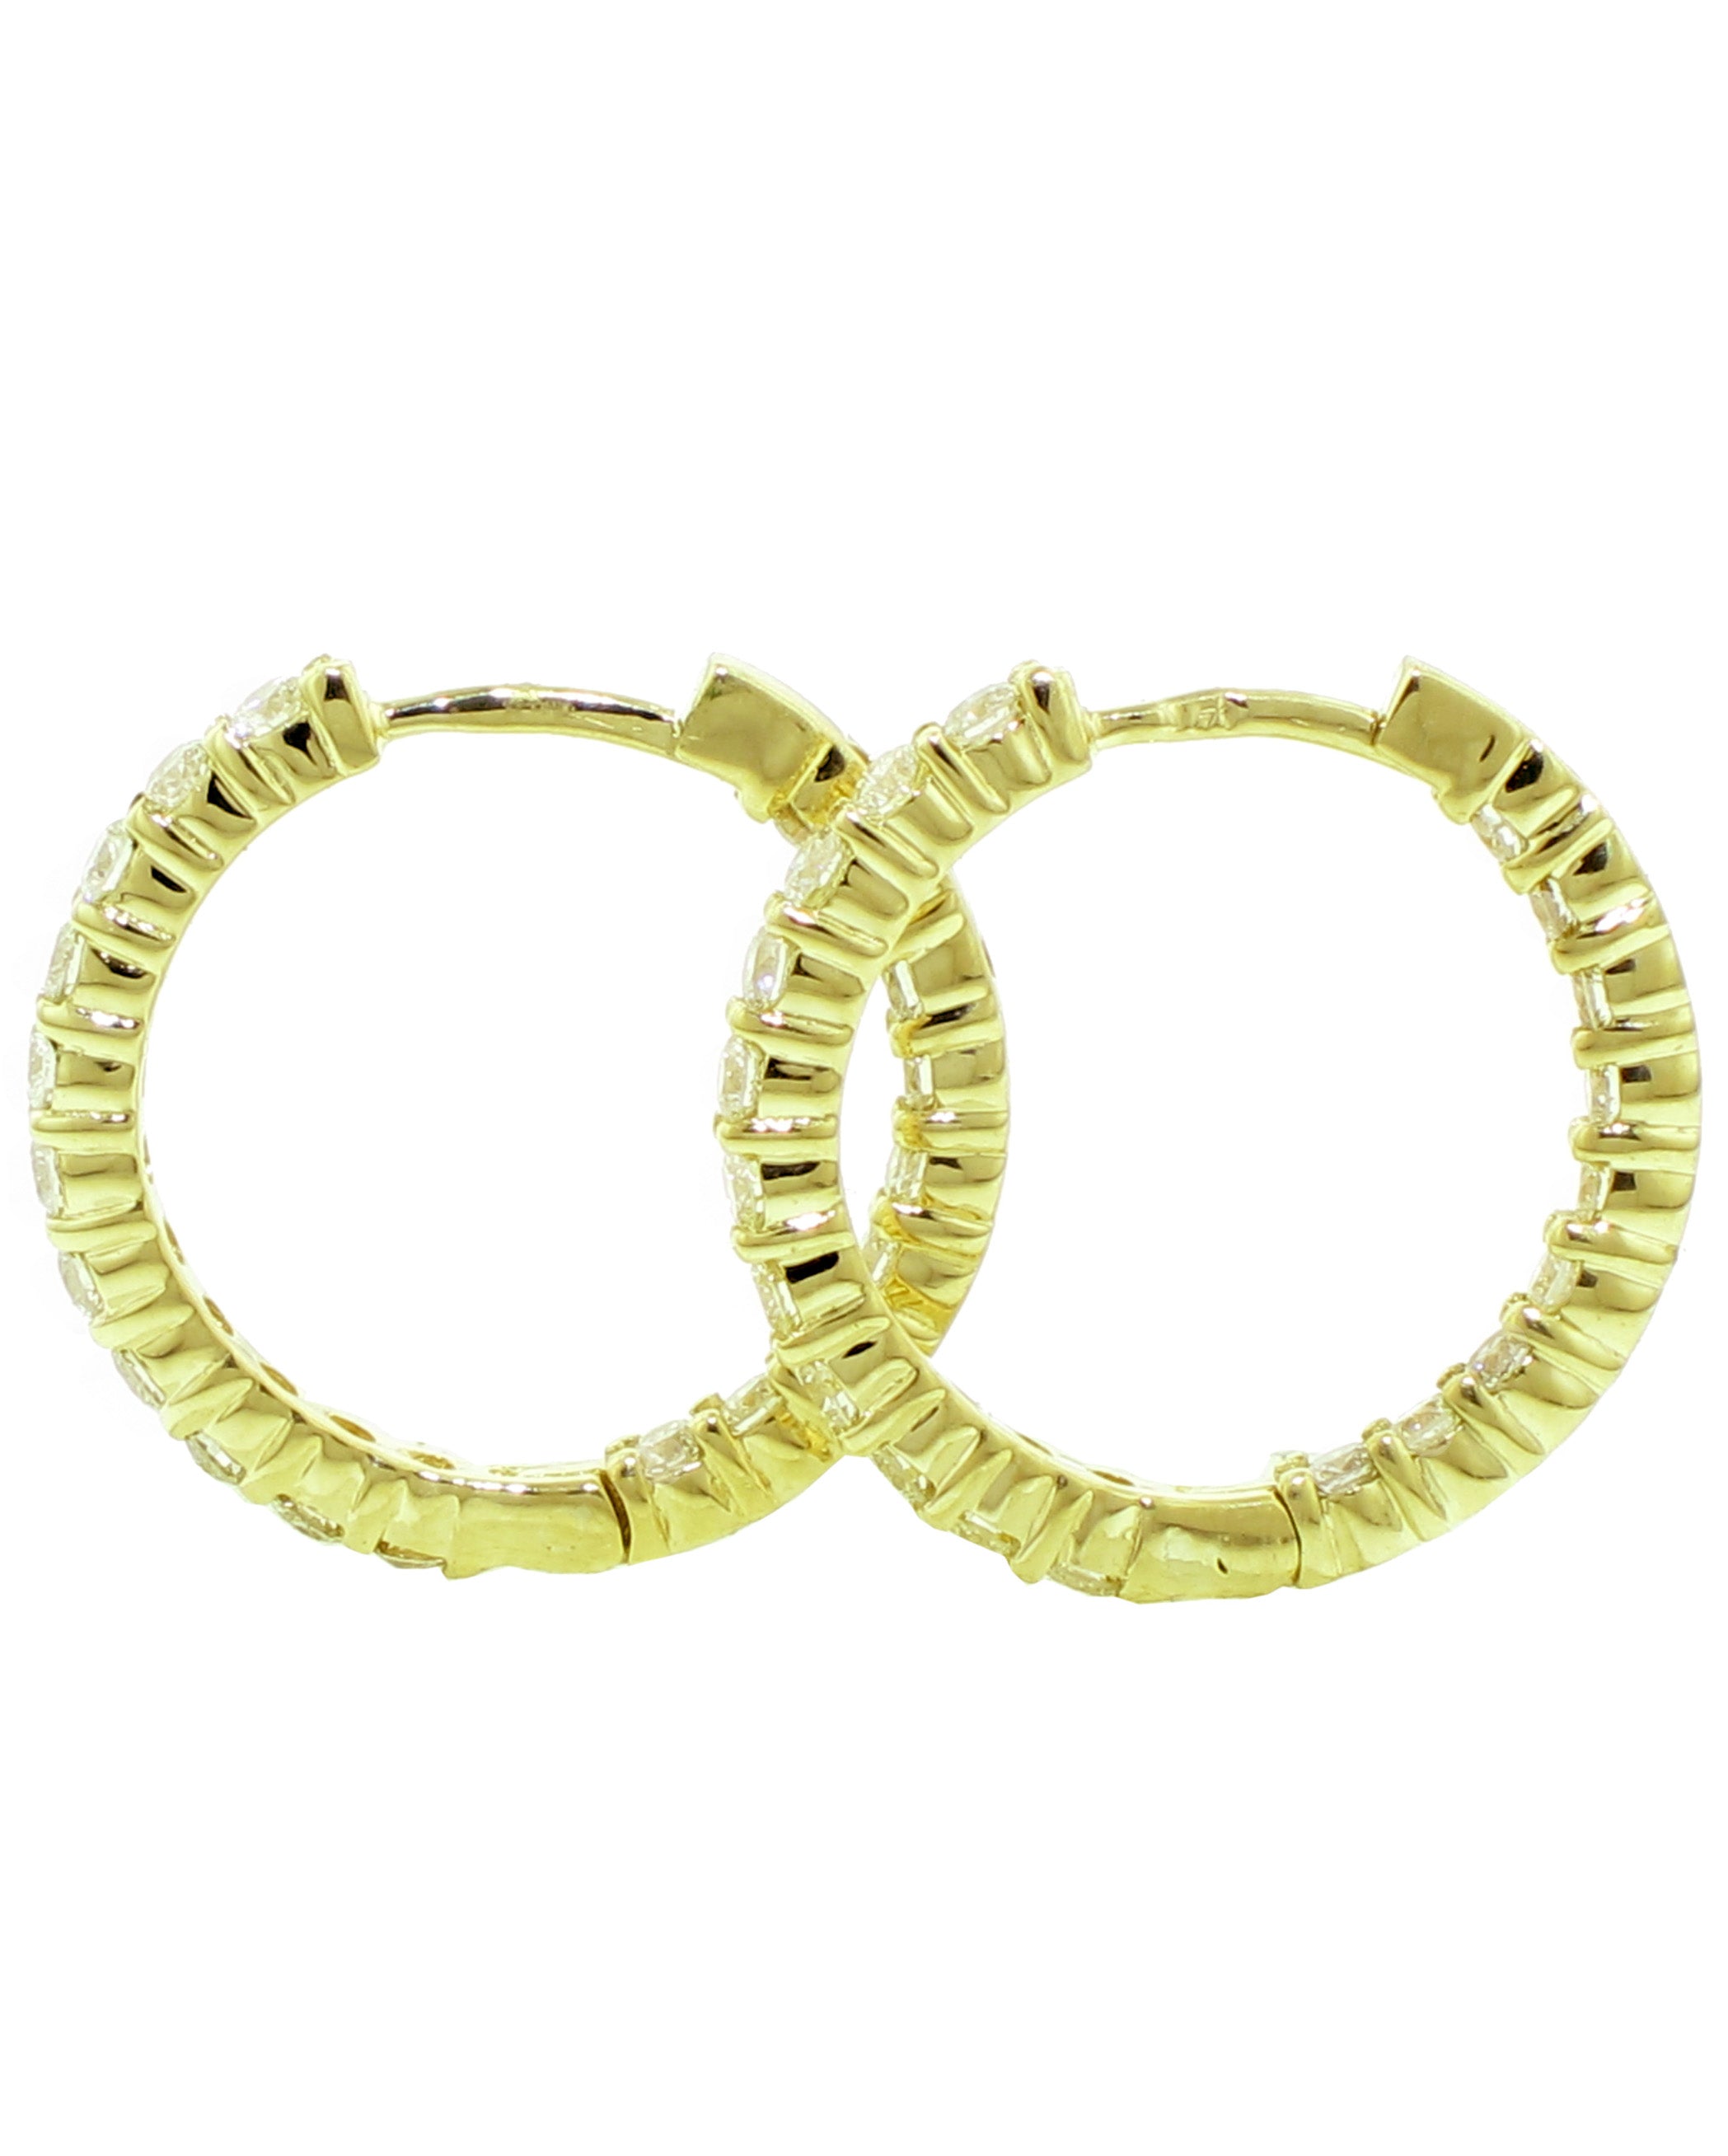 1.65 CT Diamond Inside/Outside 14k White/Yellow Gold Hoop Earrings